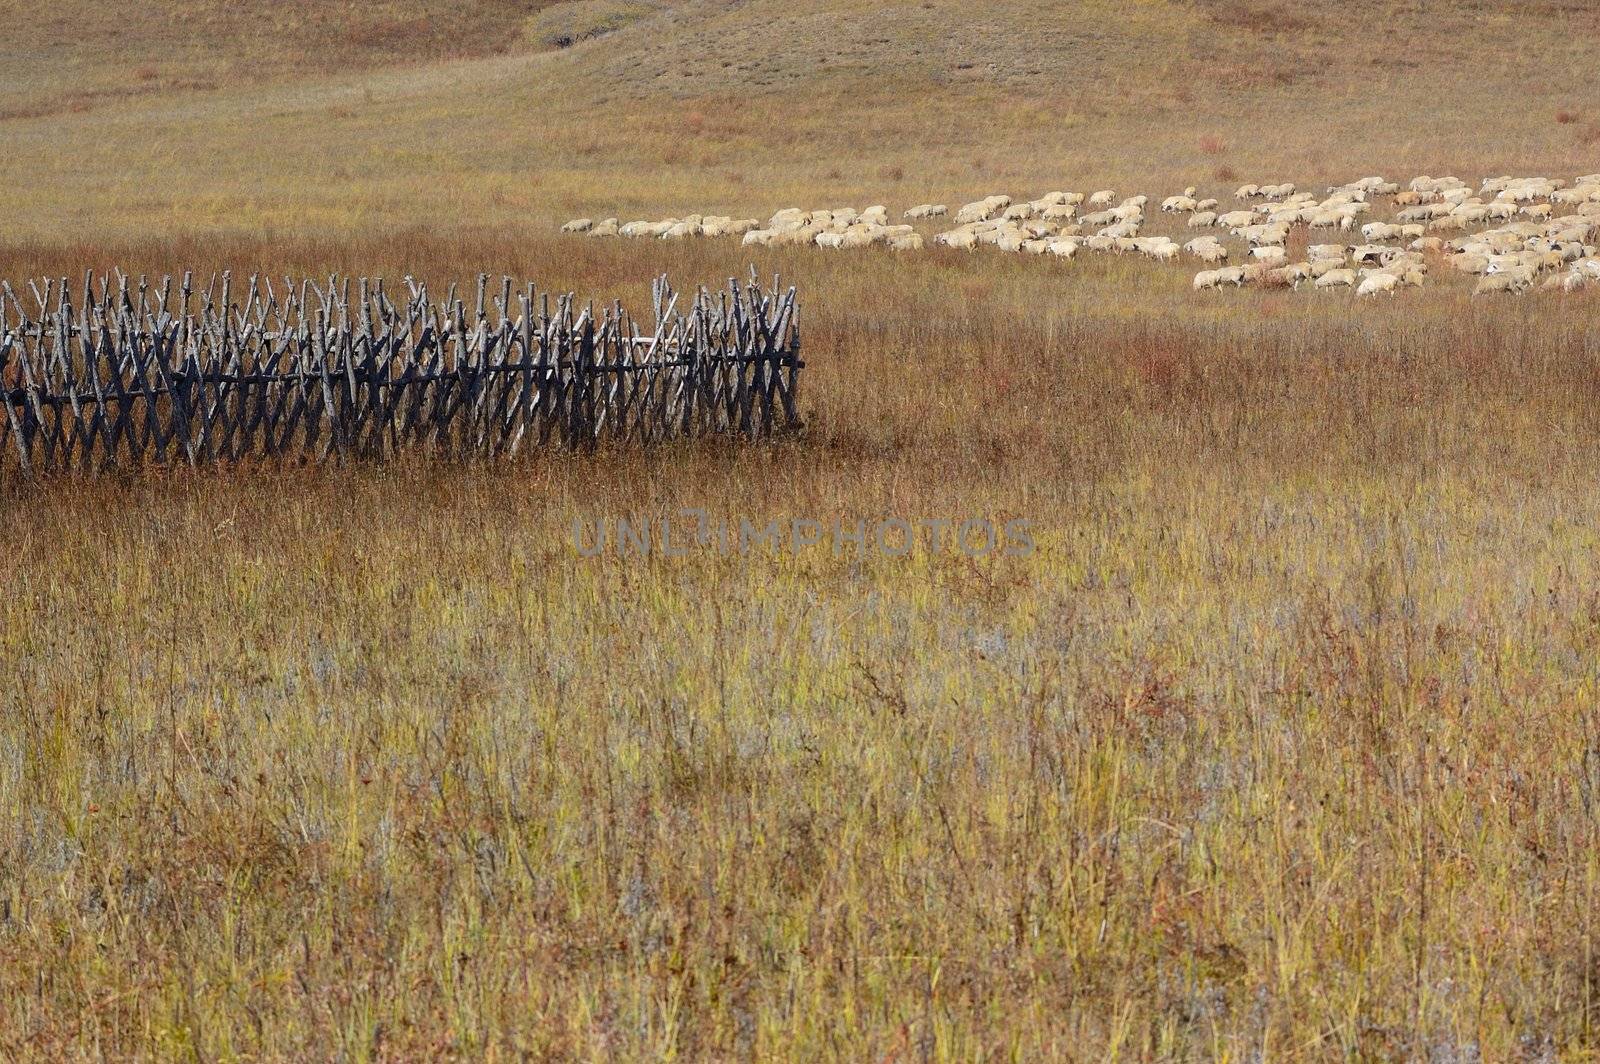 Group of sheep in Bashang grassland, Hebei, China